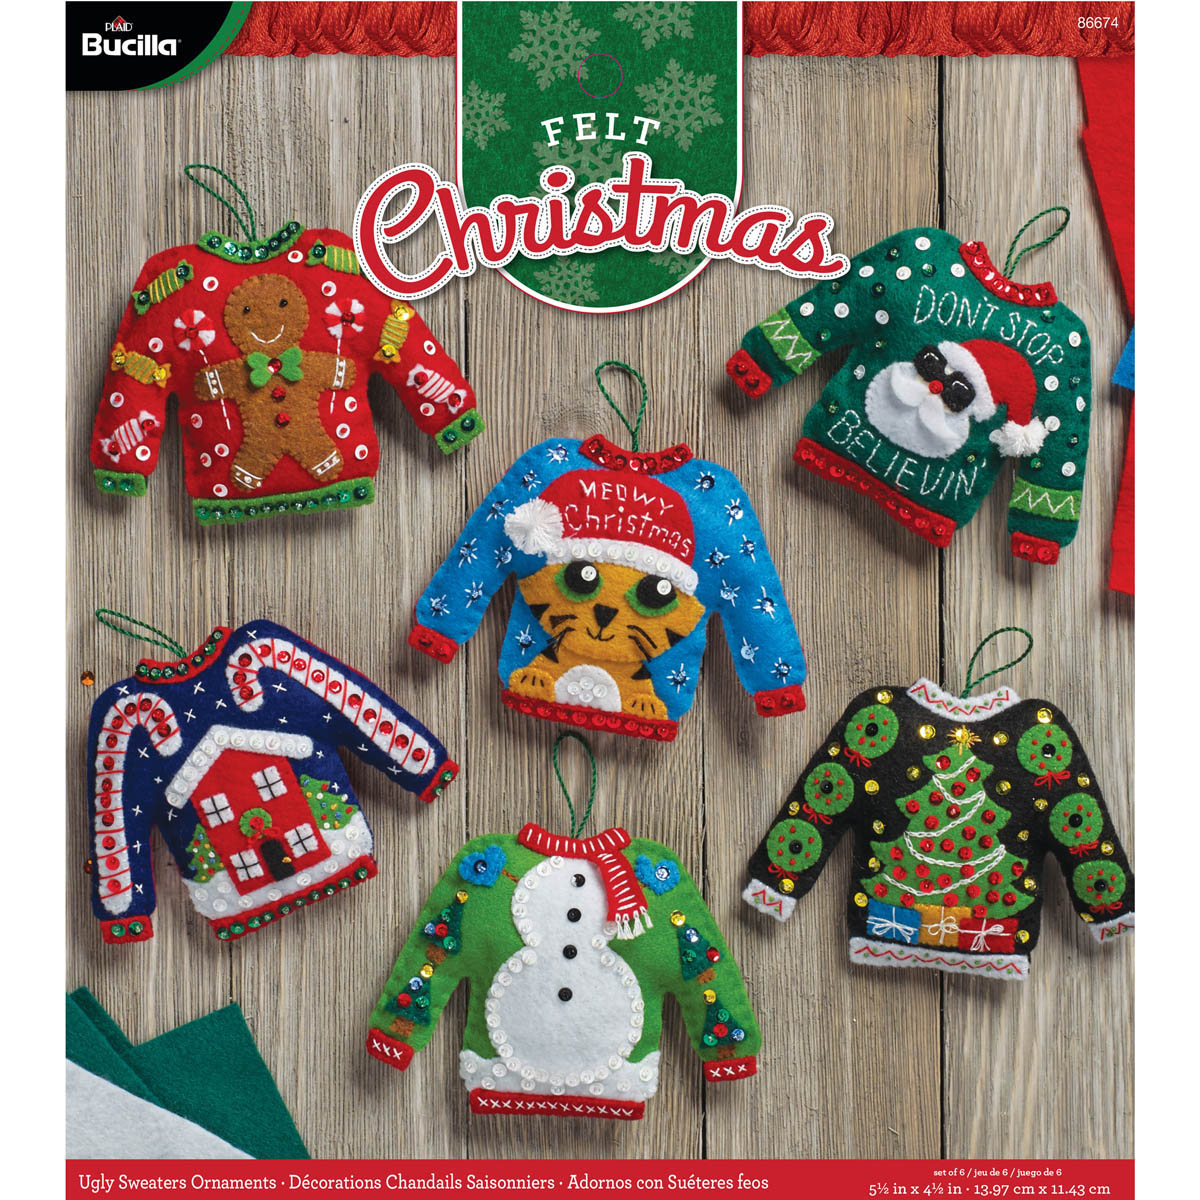 Bucilla ® Seasonal - Felt - Ornament Kits - Ugly Sweaters - 86674